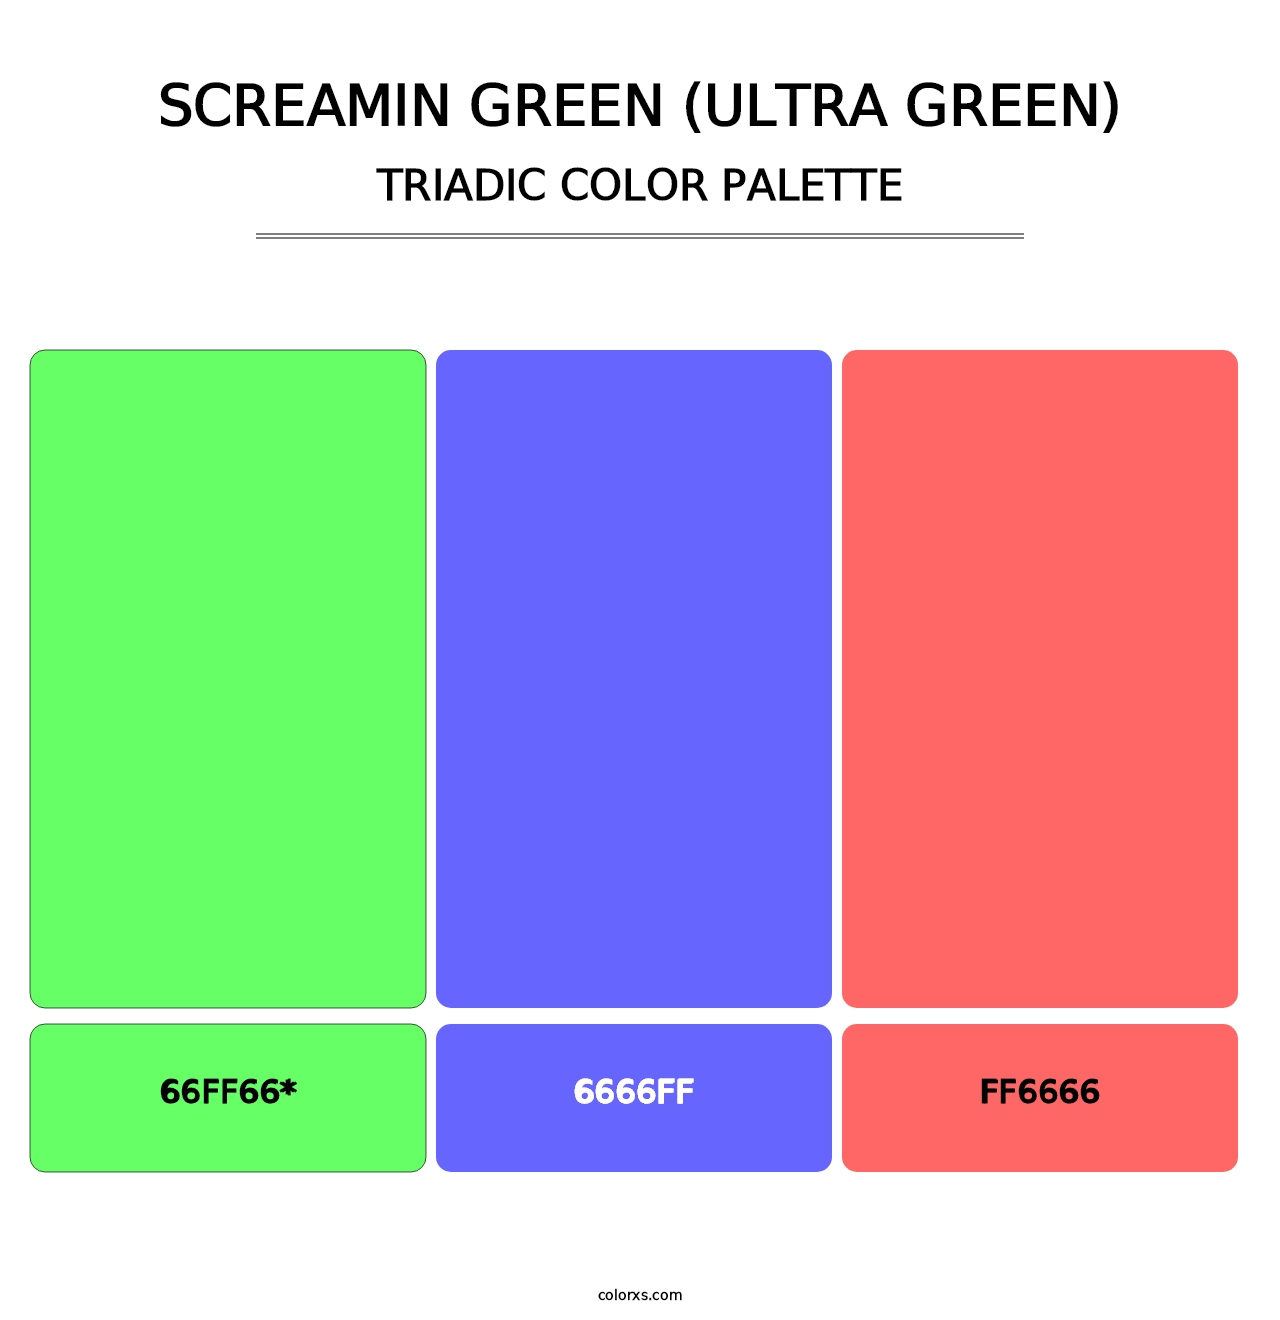 Screamin Green (Ultra Green) - Triadic Color Palette